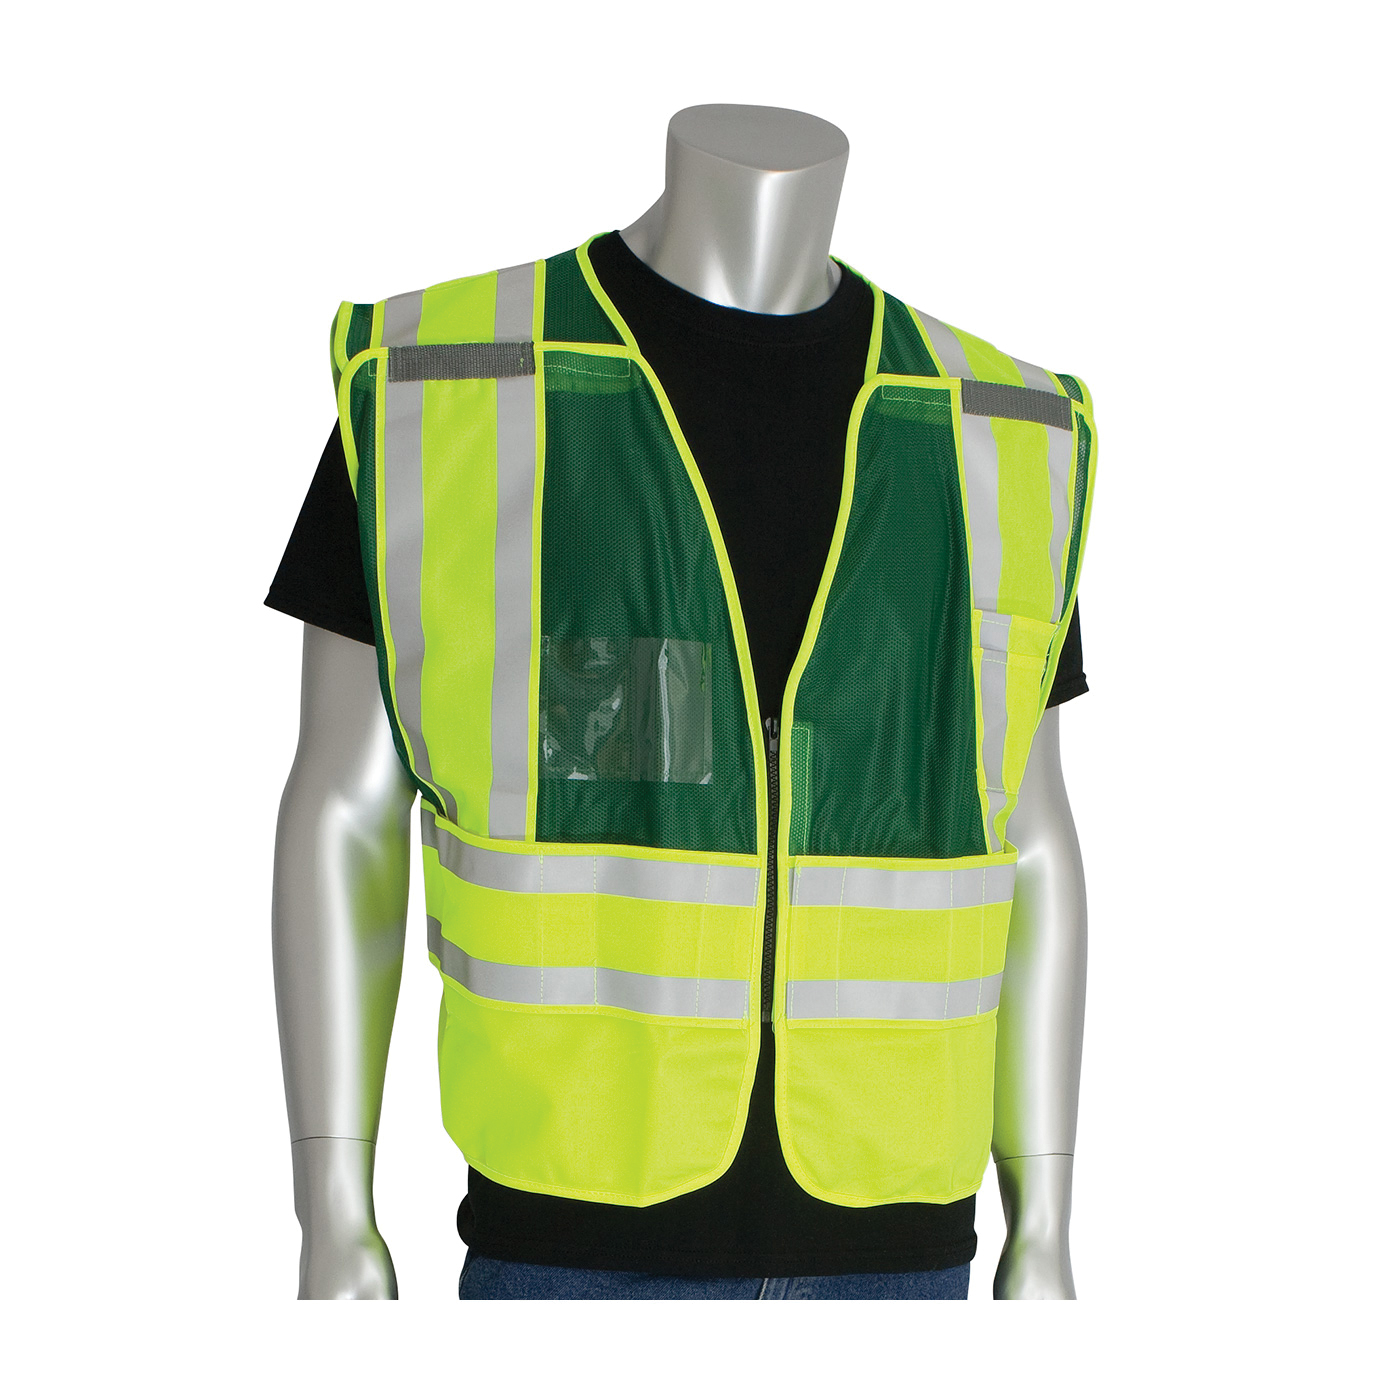 PIP® SafetyGear 302-PSV-GRN-M/XL Public Safety Vest, M/XL, Green/Hi-Viz Lime Yellow, Polyester, Front Zipper Closure, 2 Pockets, ANSI Class: Class 2, ANSI/ISEA 207